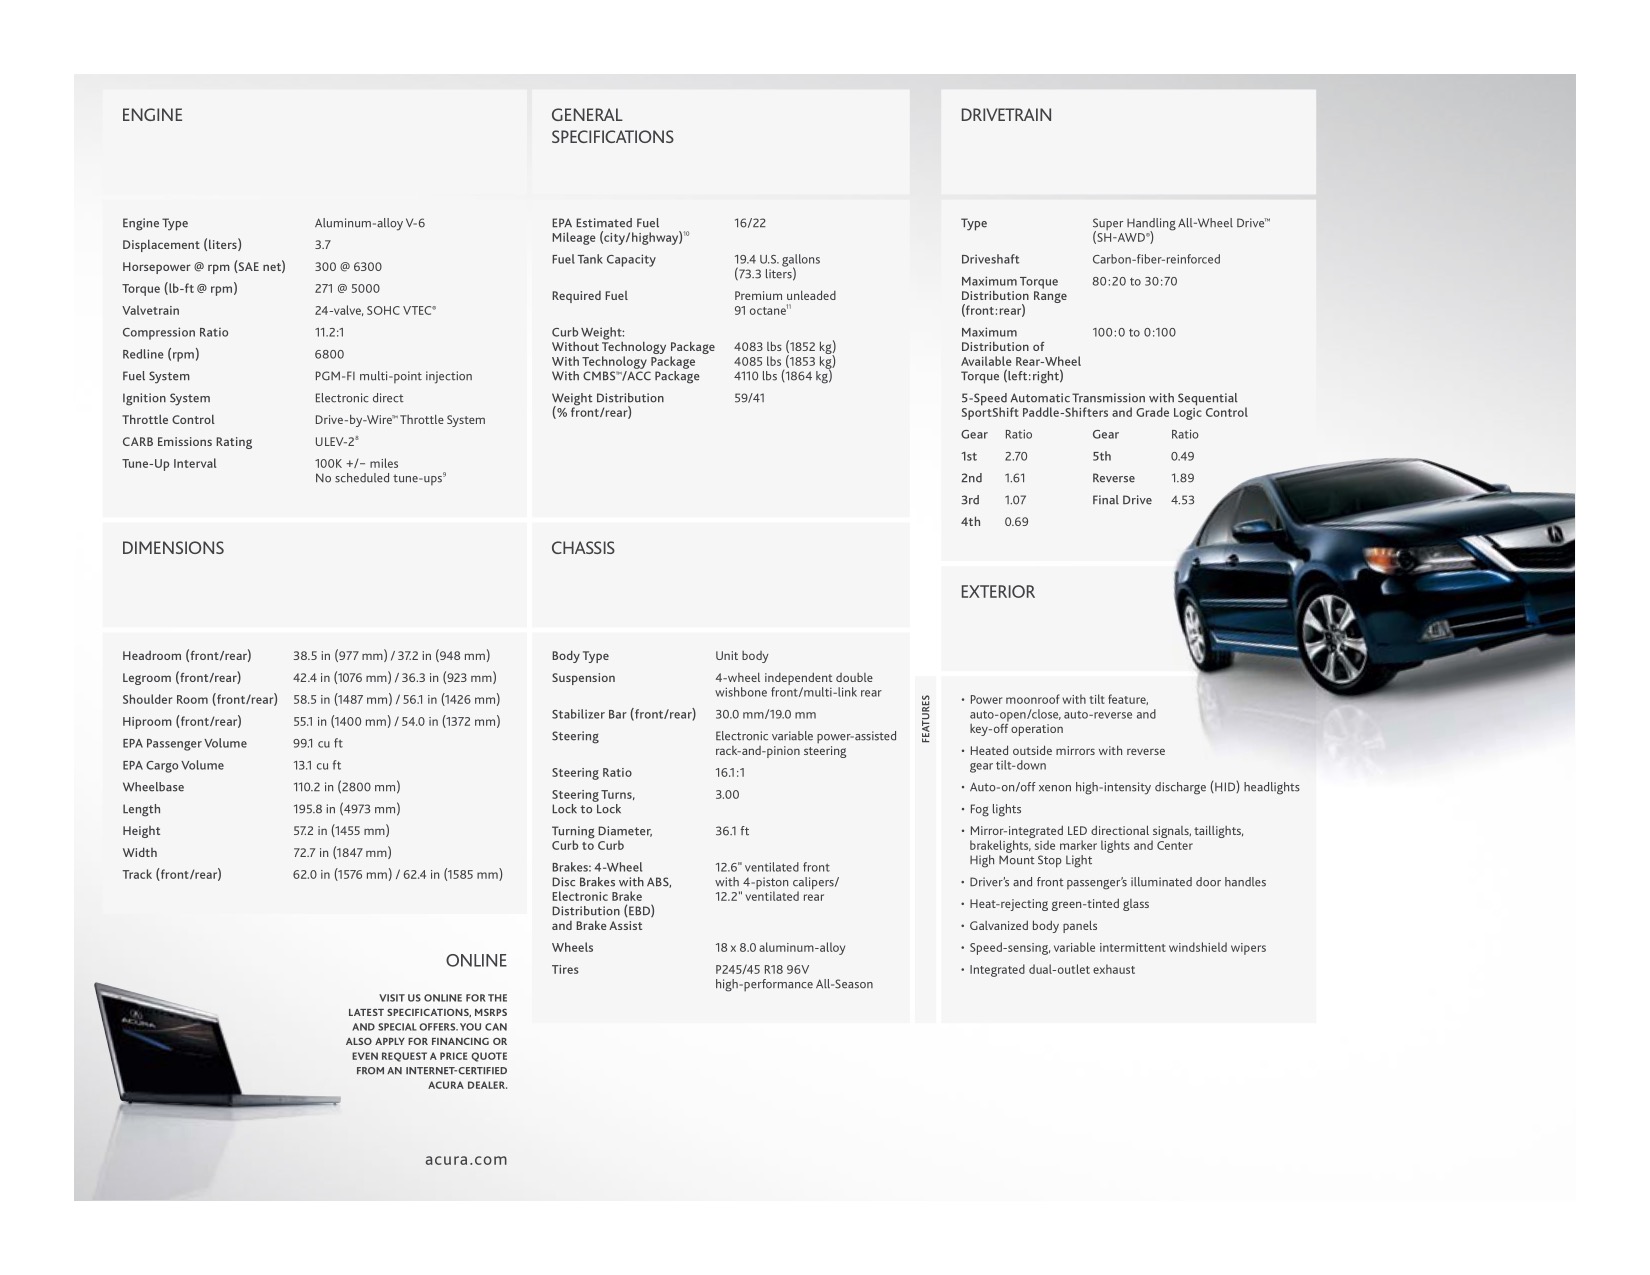 2010 Acura RL Brochure Page 1